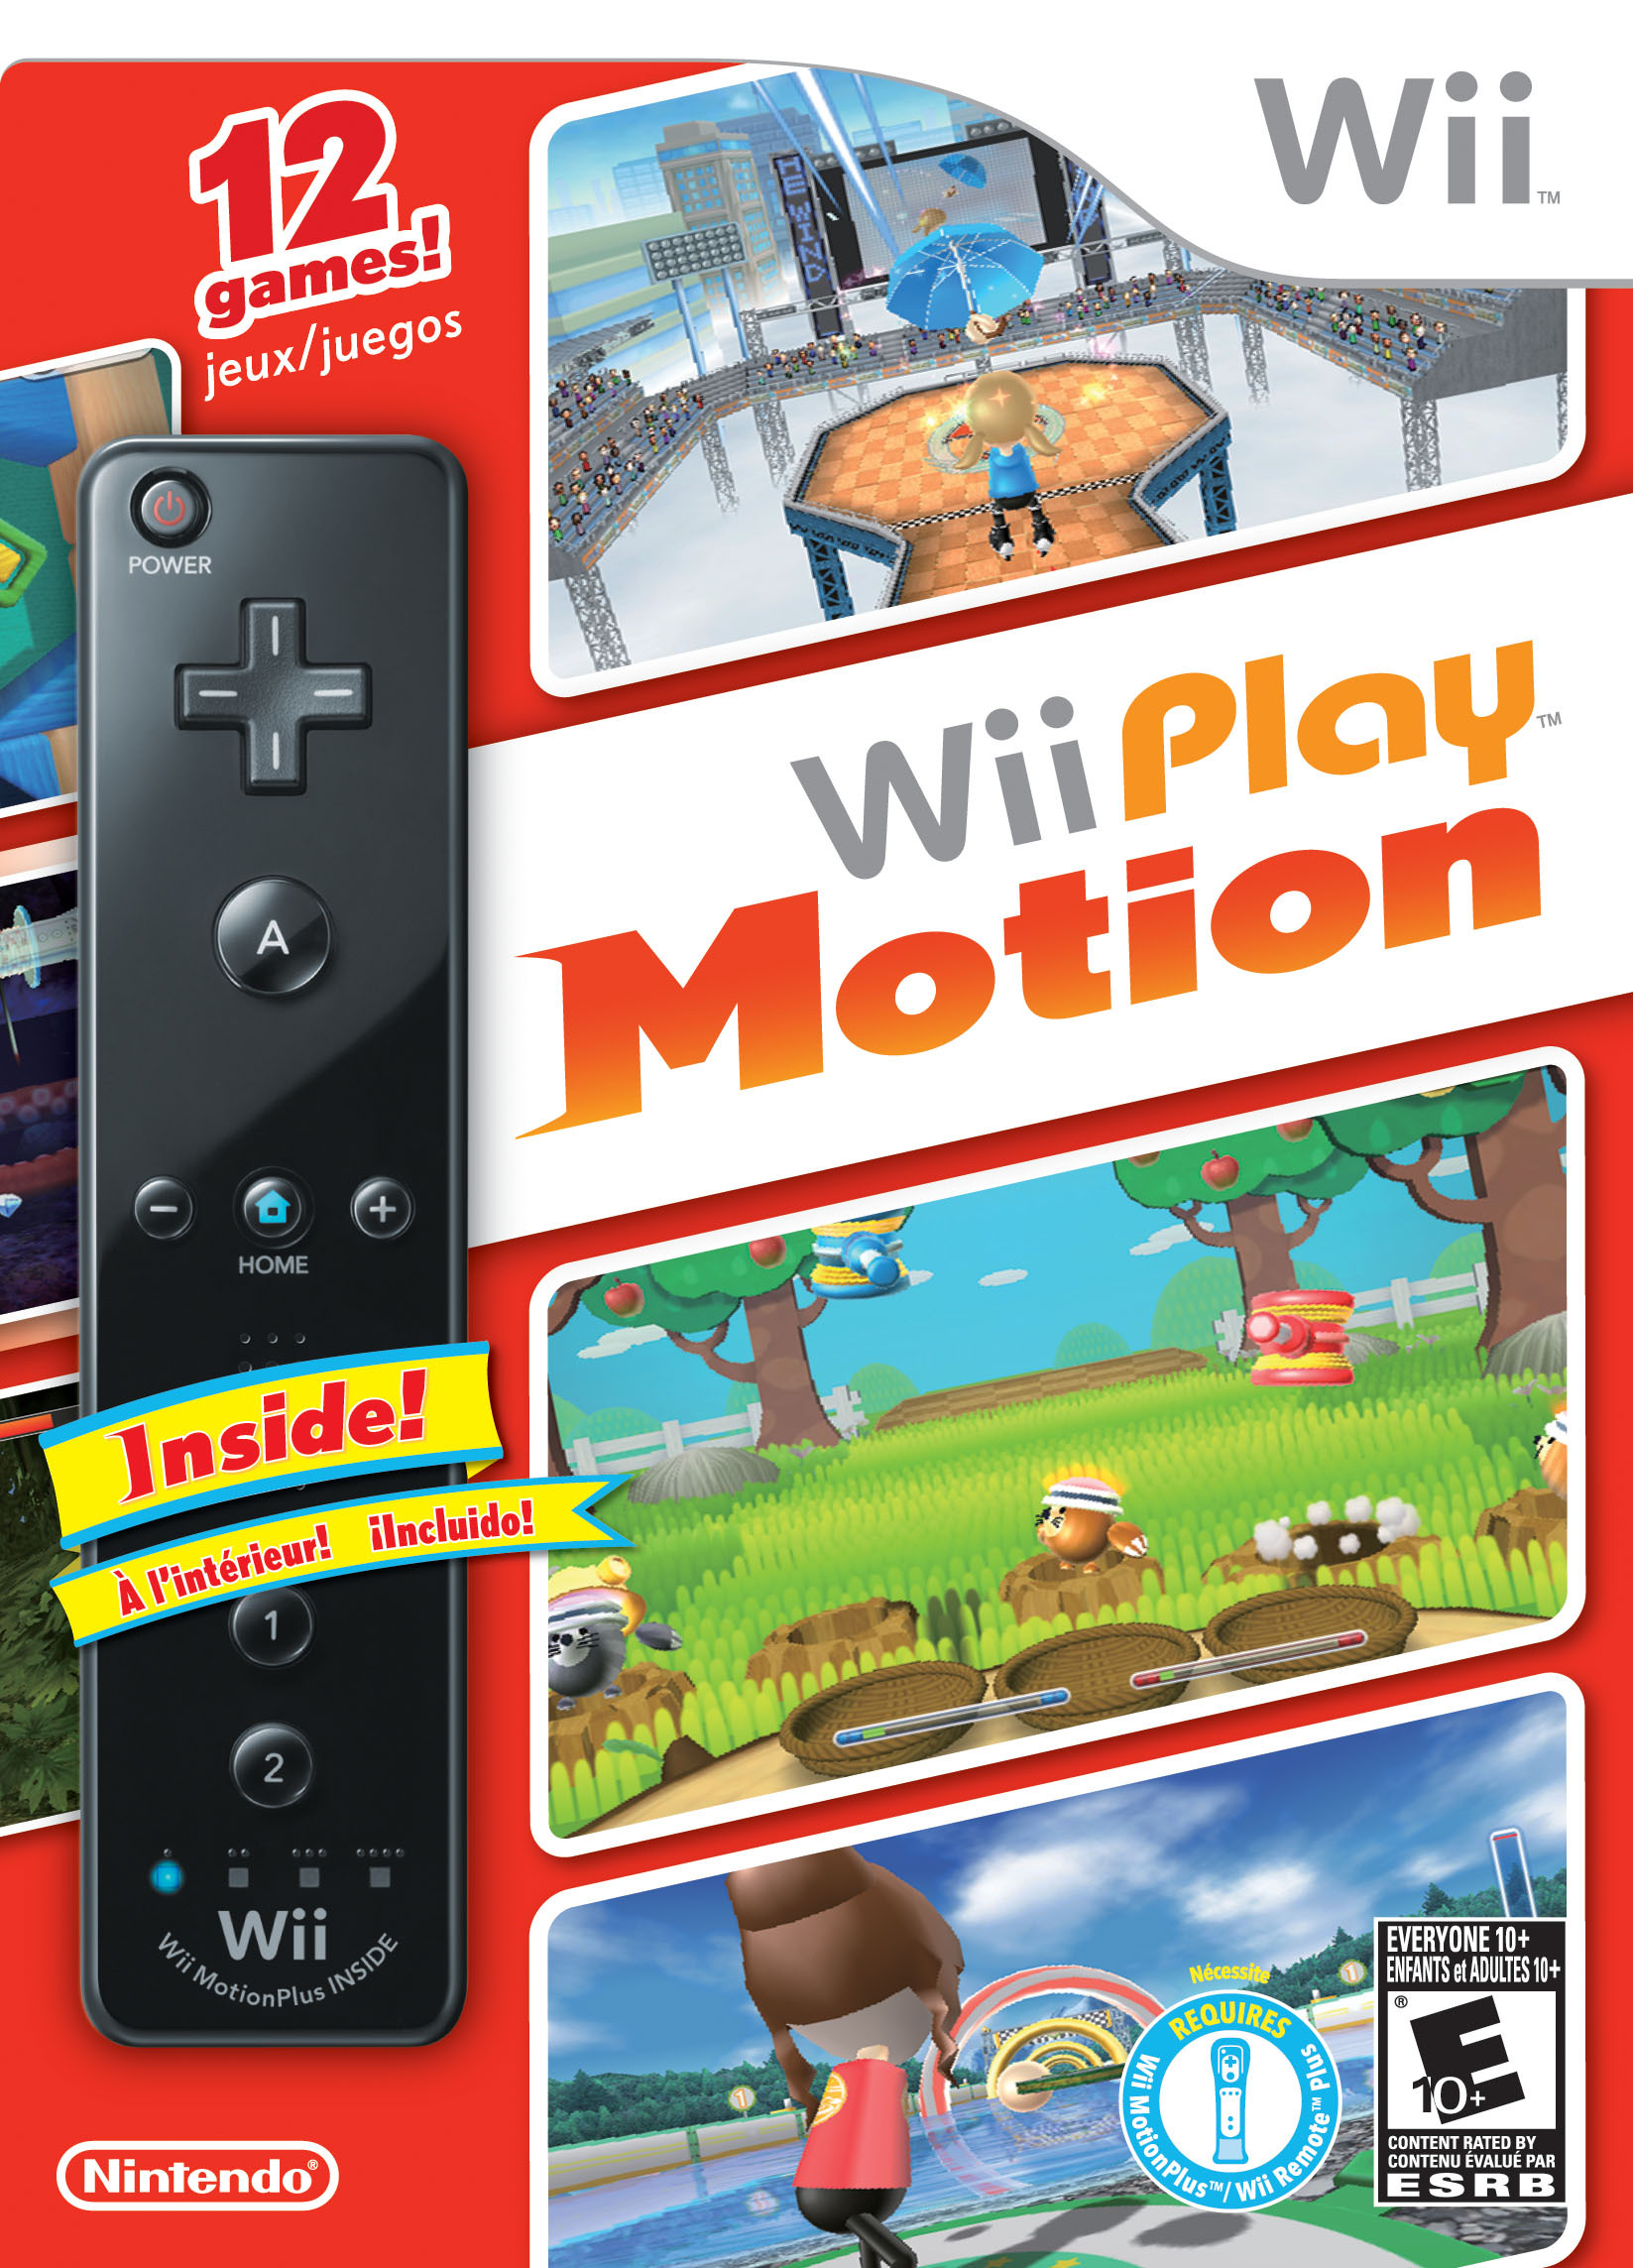 Wii_WiiPlayMotion_pkg01_highres.jpg